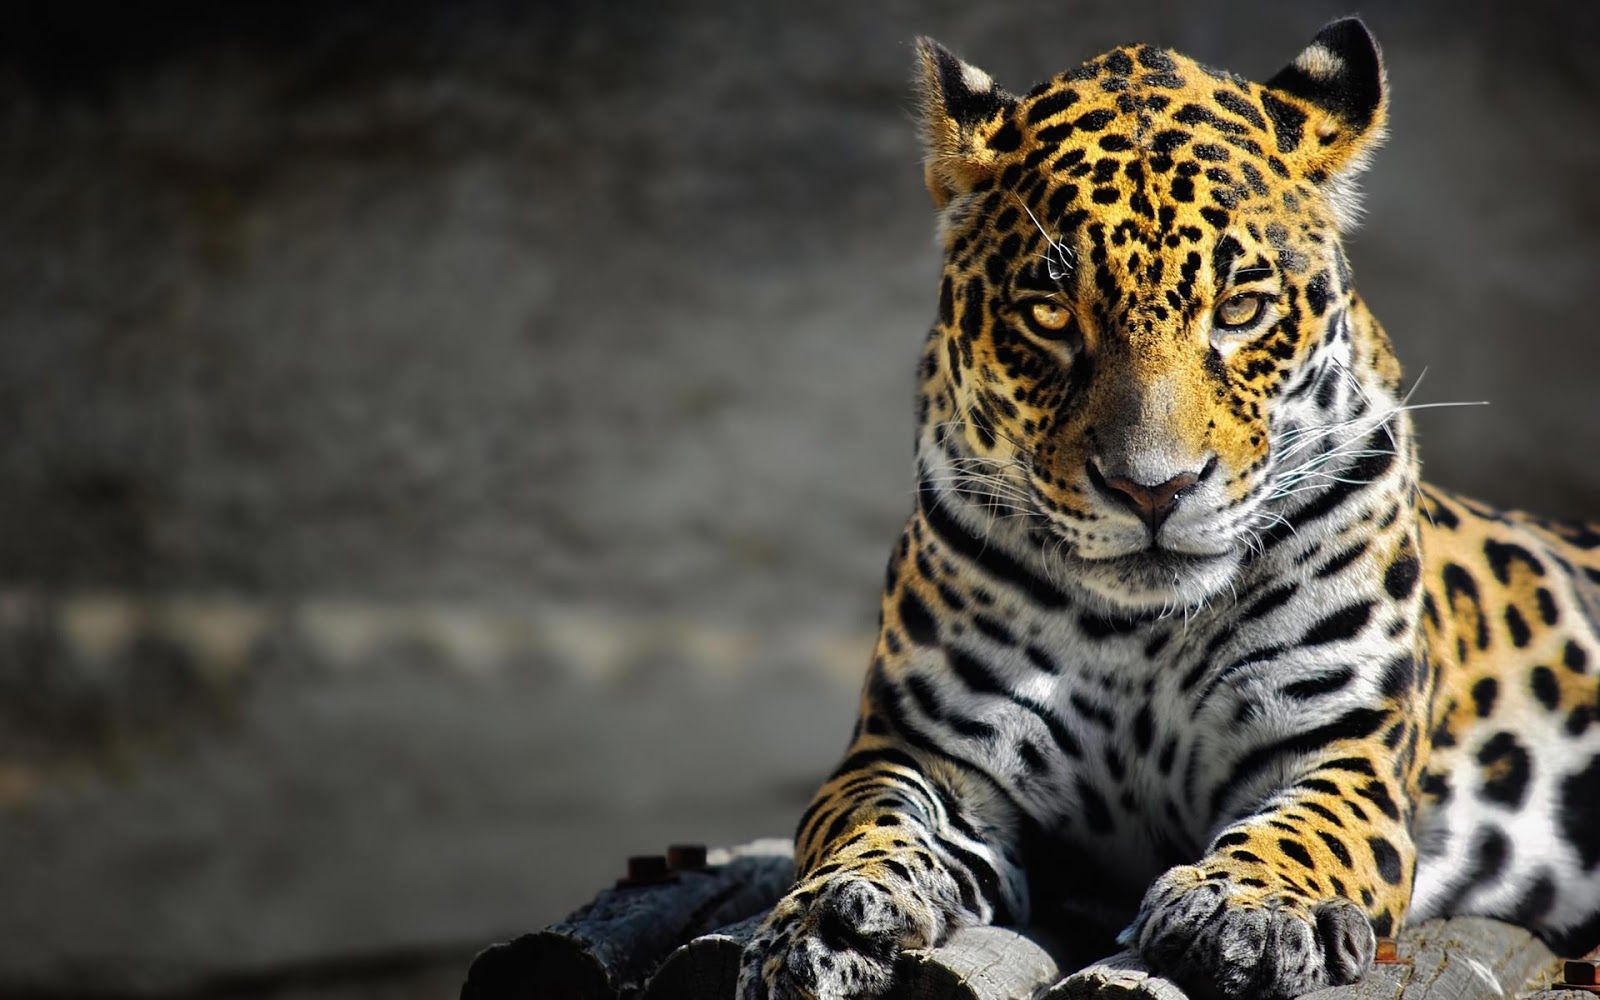 Leopard HD Image. Jaguar animal, Leopard picture, Tiger wallpaper